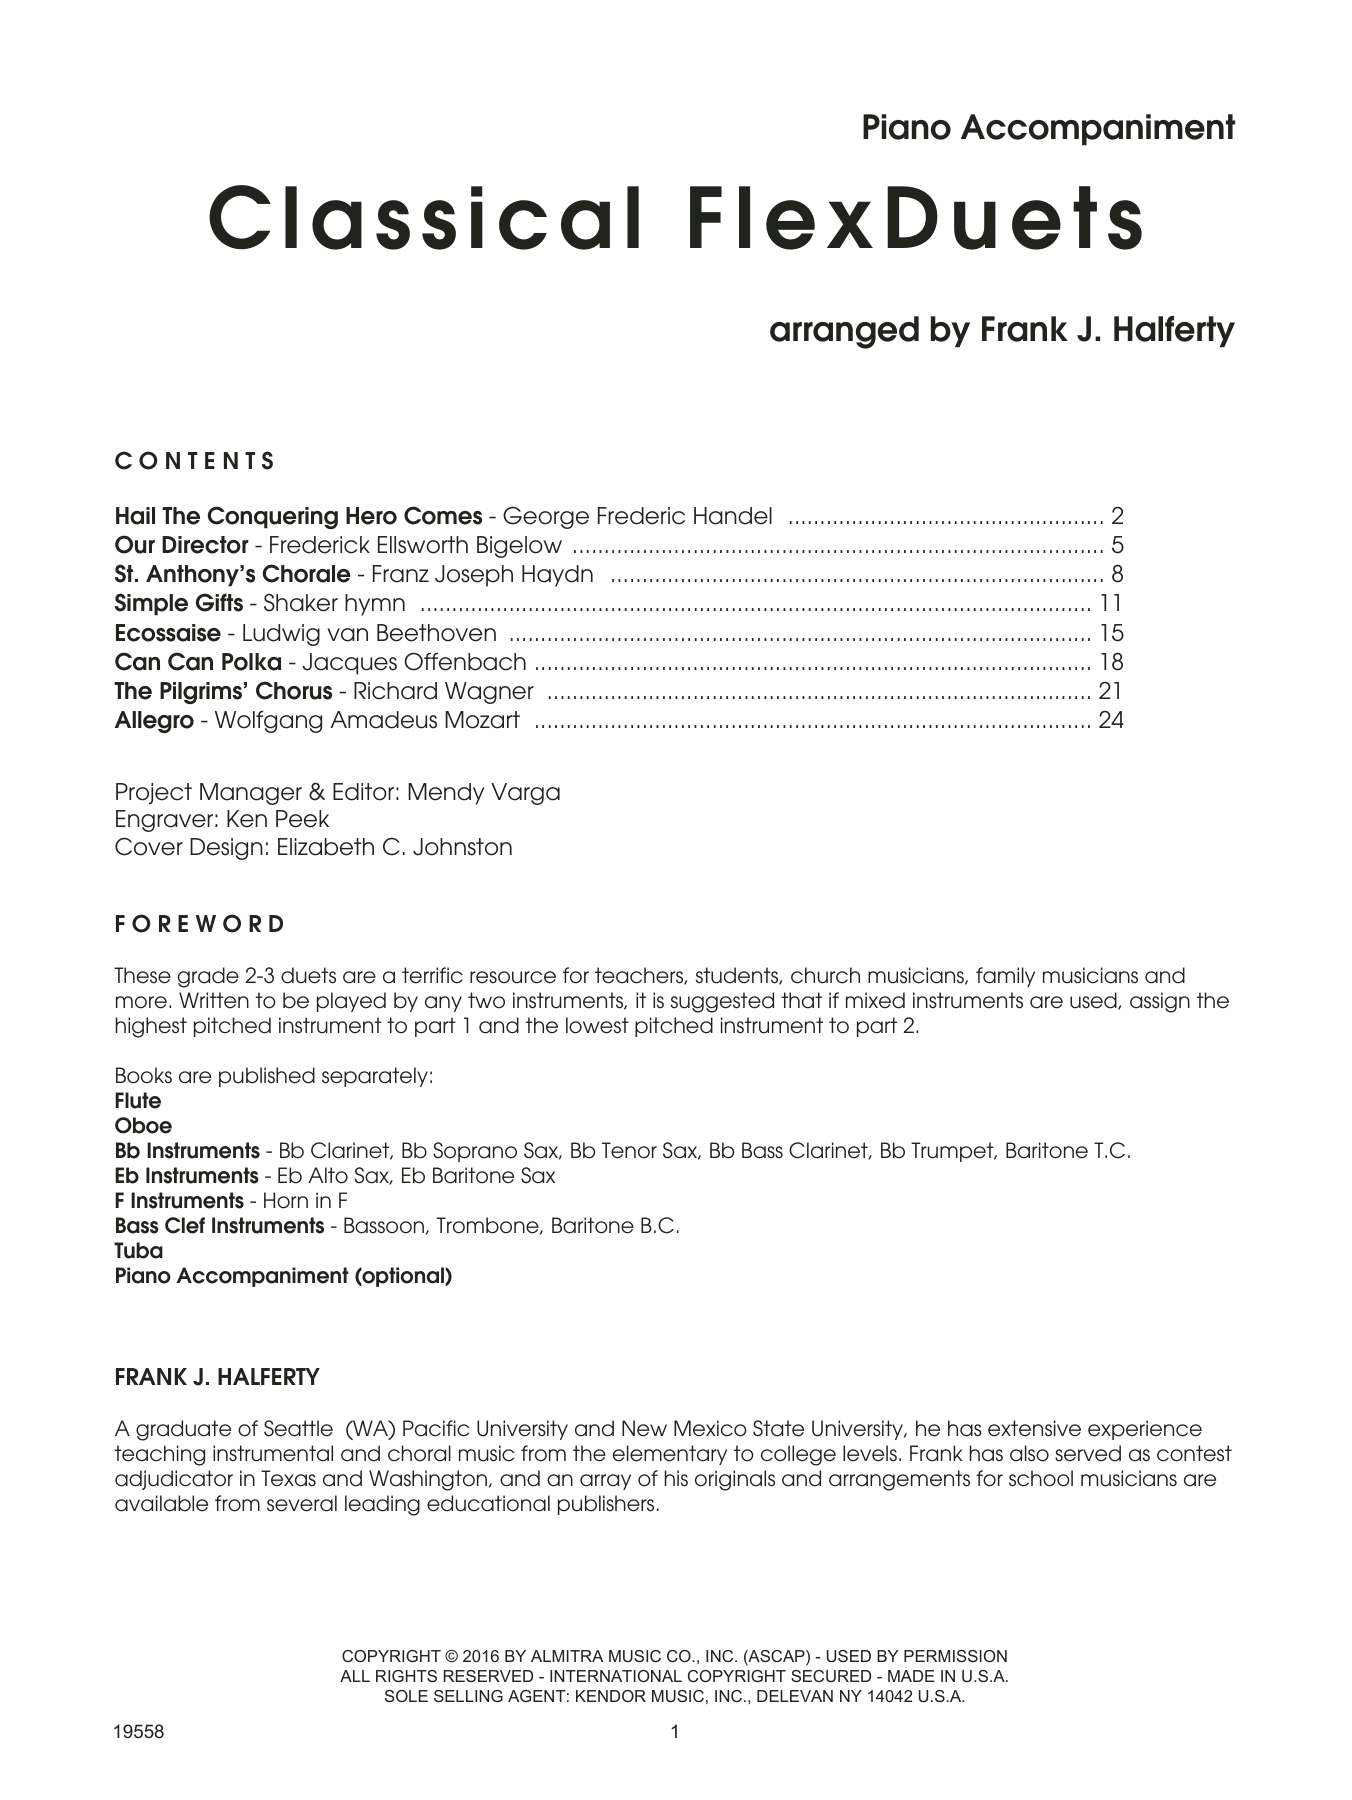 Download Frank J. Halferty Classical FlexDuets - Piano Accompanime Sheet Music